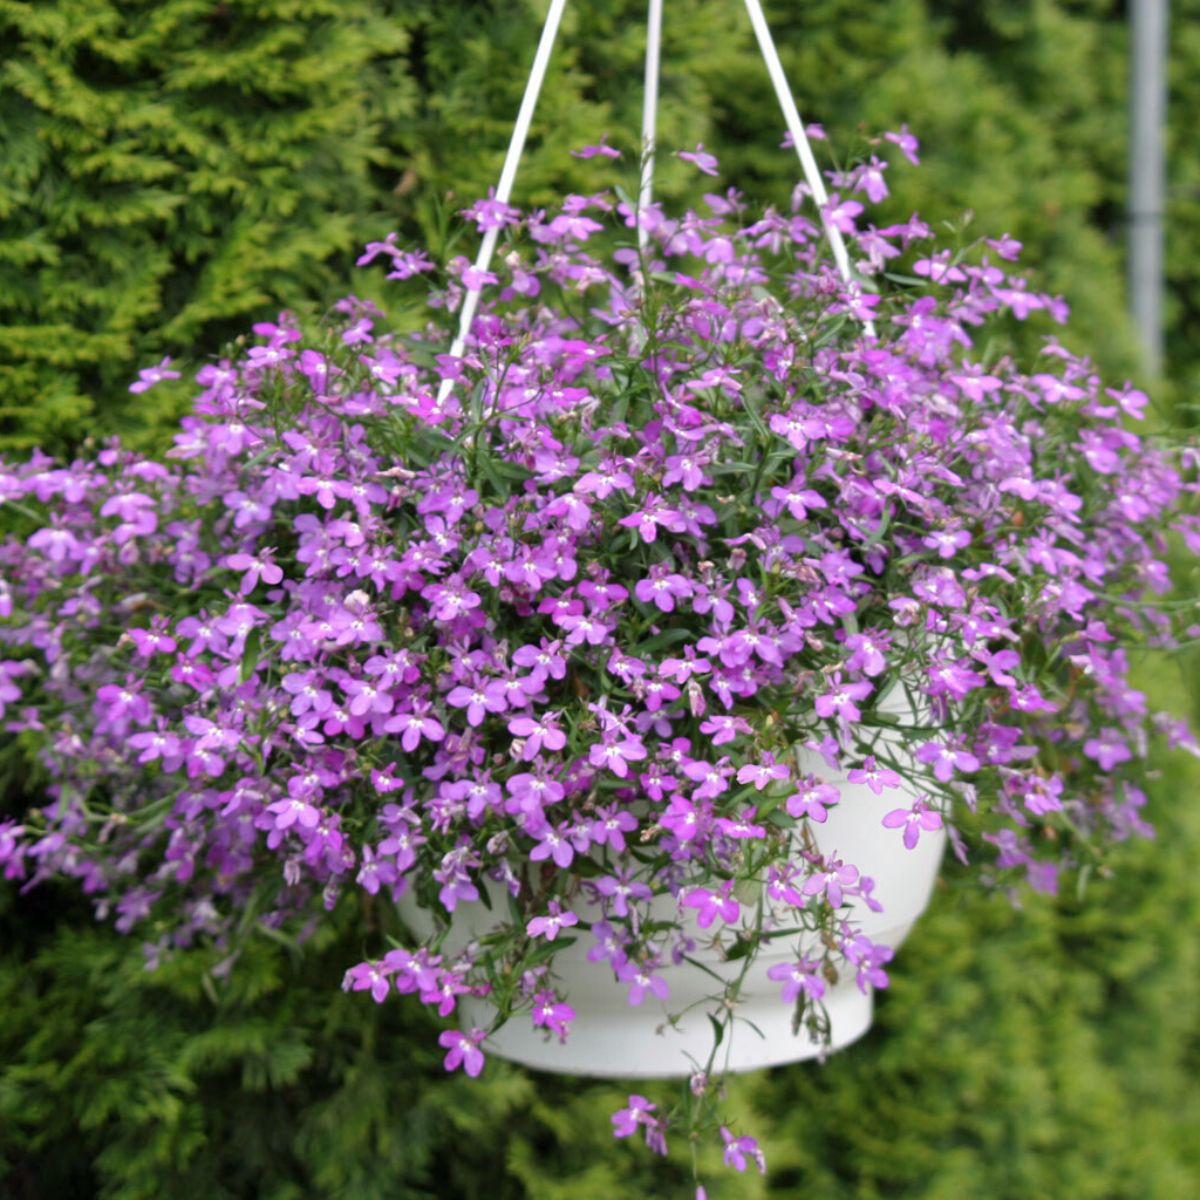 Lobelia top 10 flowers for hanging baskets on Thursd